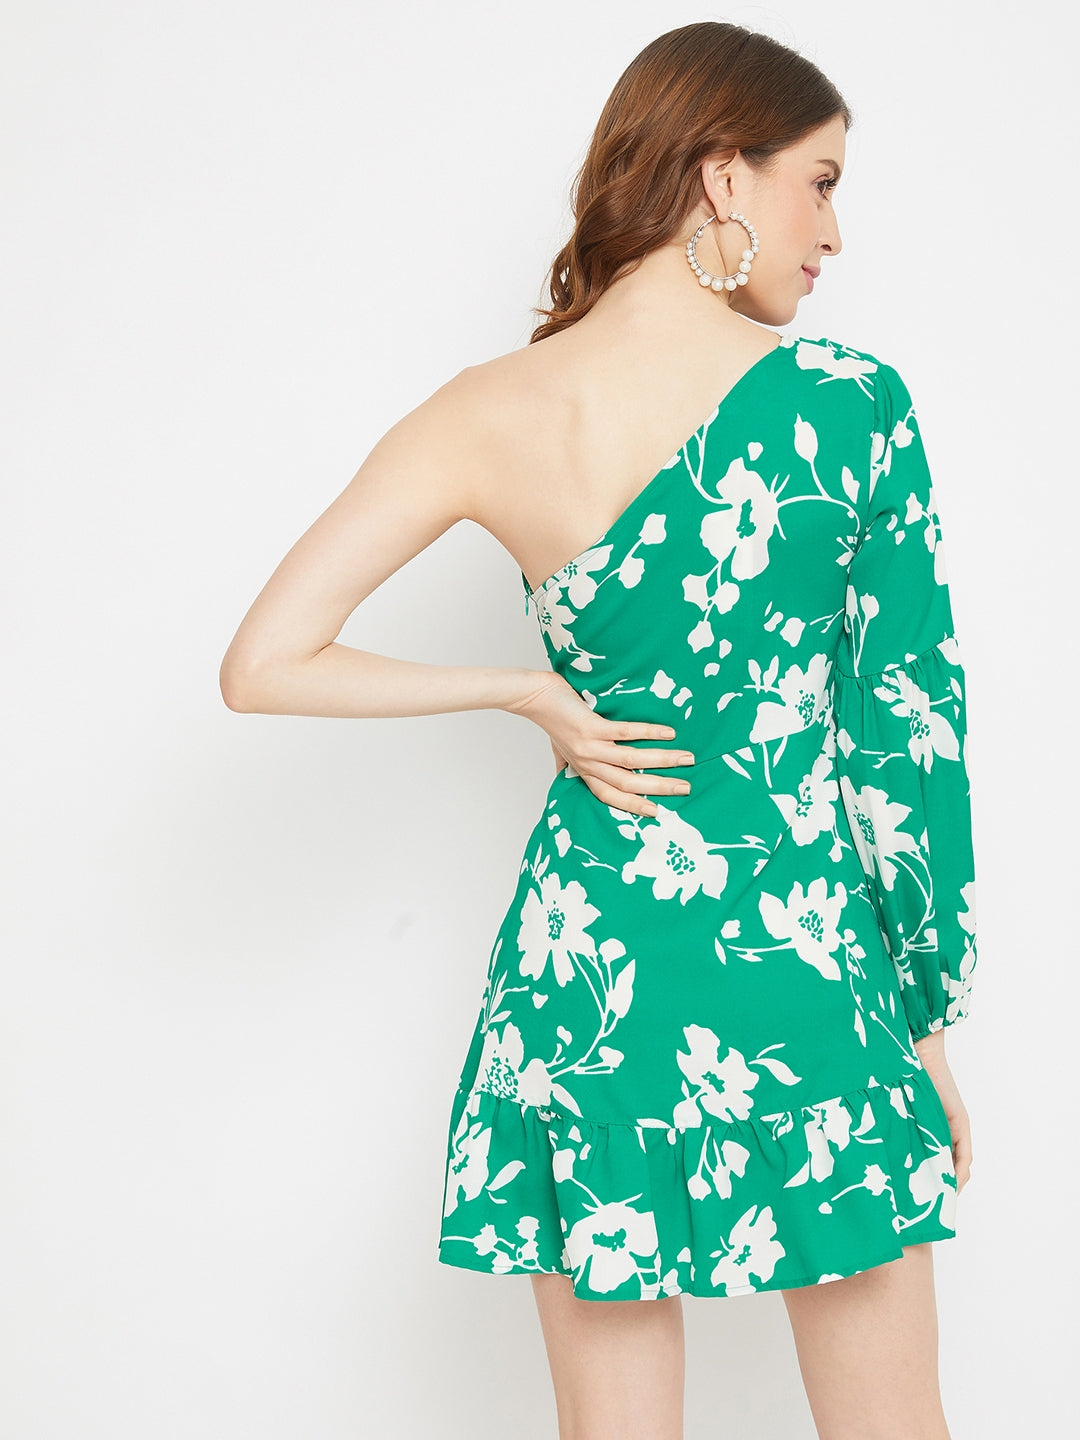 Berrylush Women Green Floral Printed One-Shoulder Fit & Flare Dress